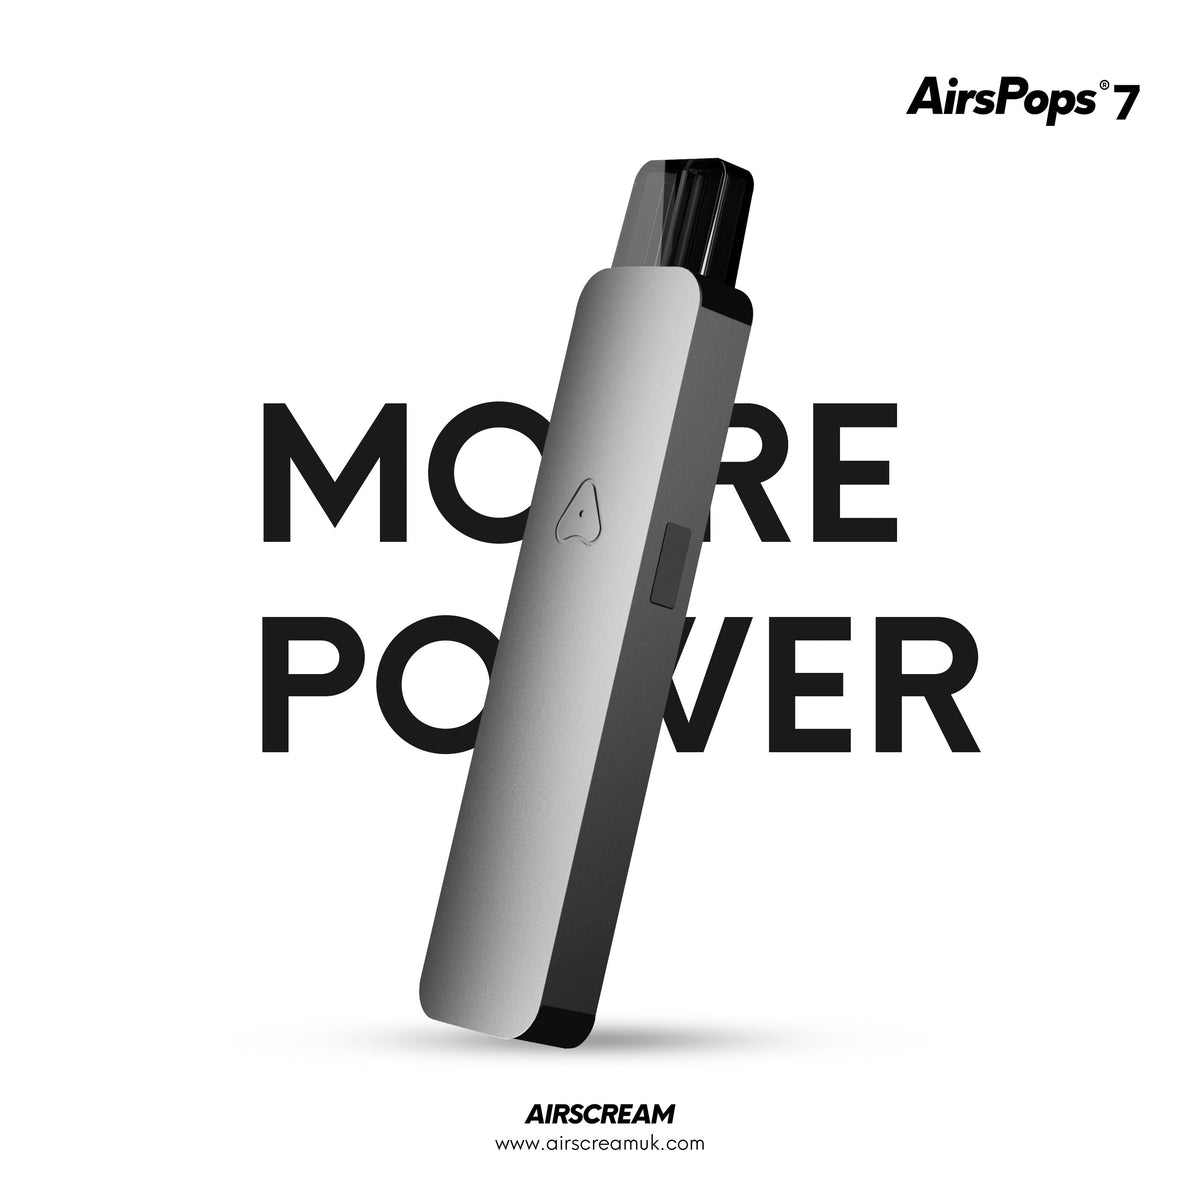 AIRSCREAM AirsPops 7 Device Set